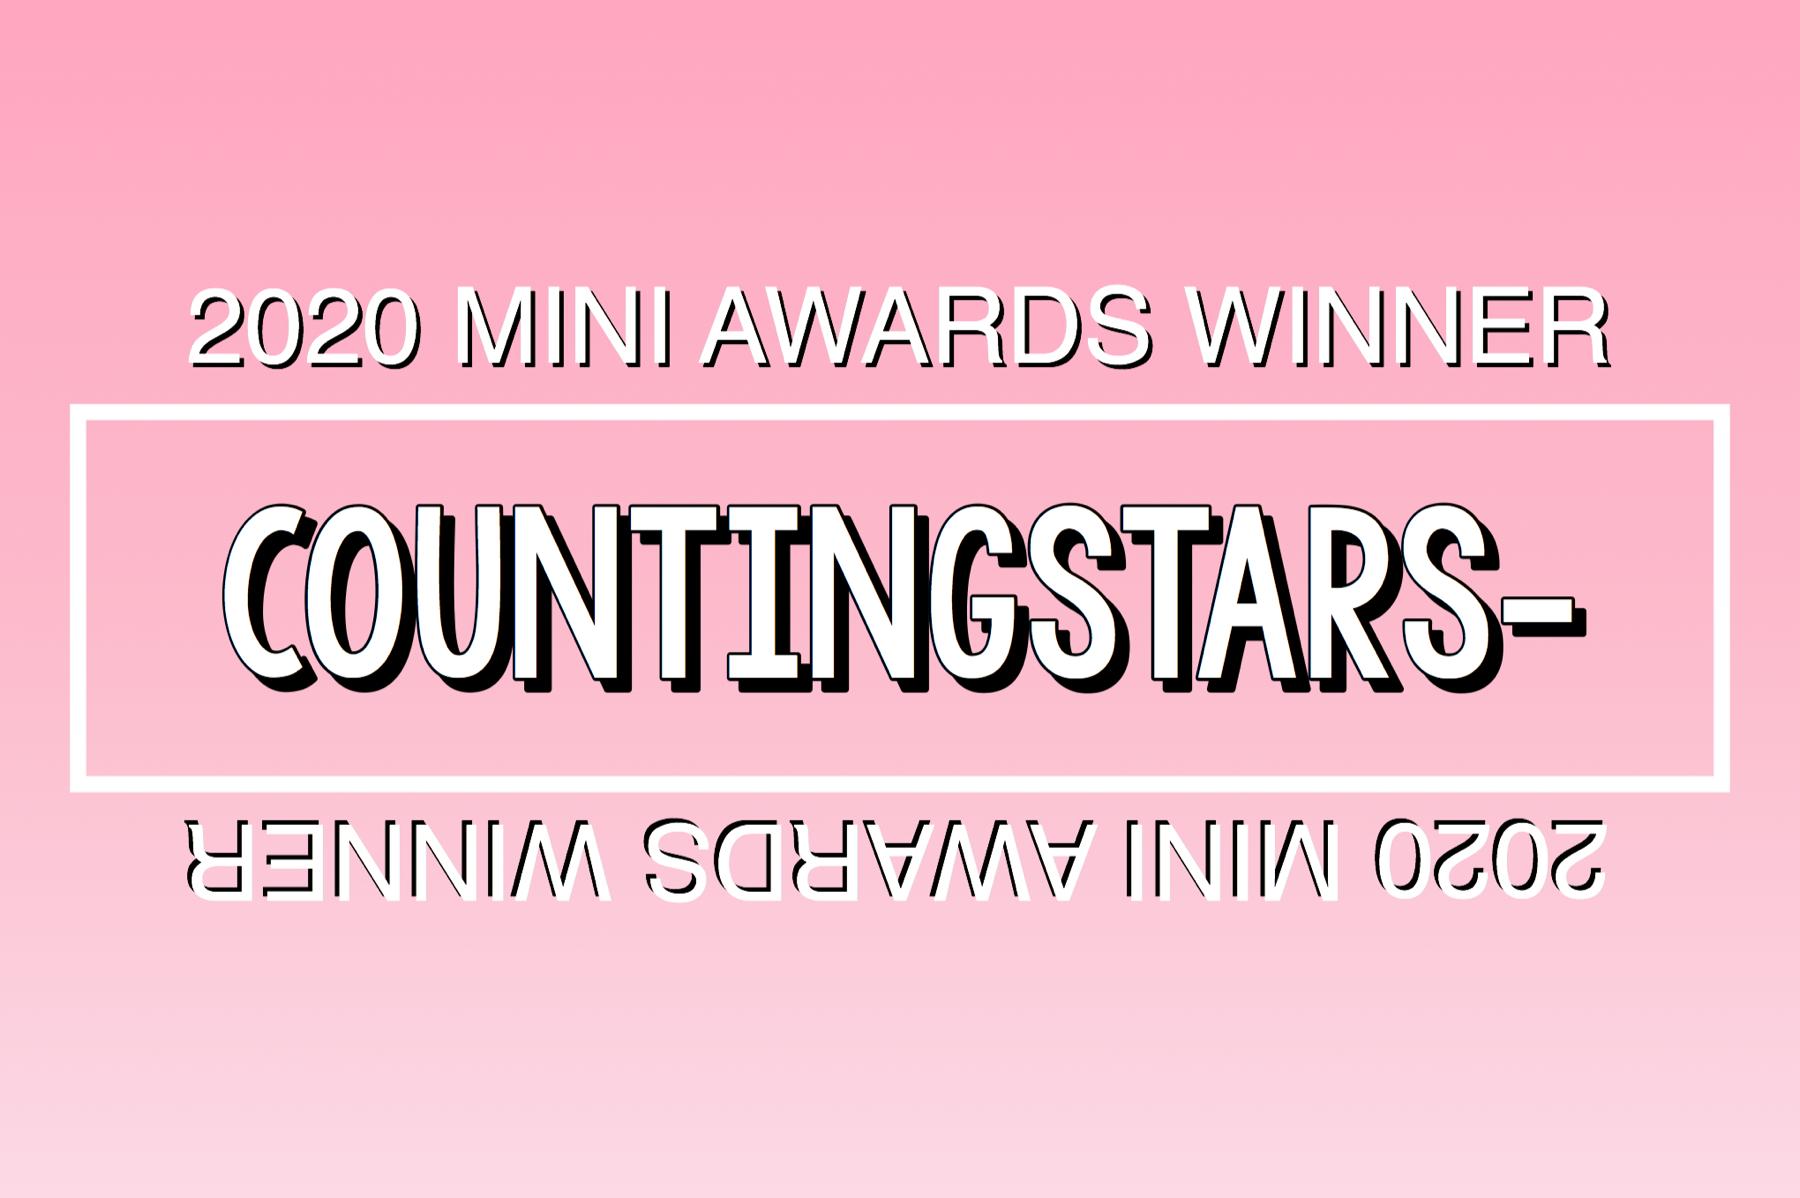 2020 Mini Awards Winner @countingstars-!